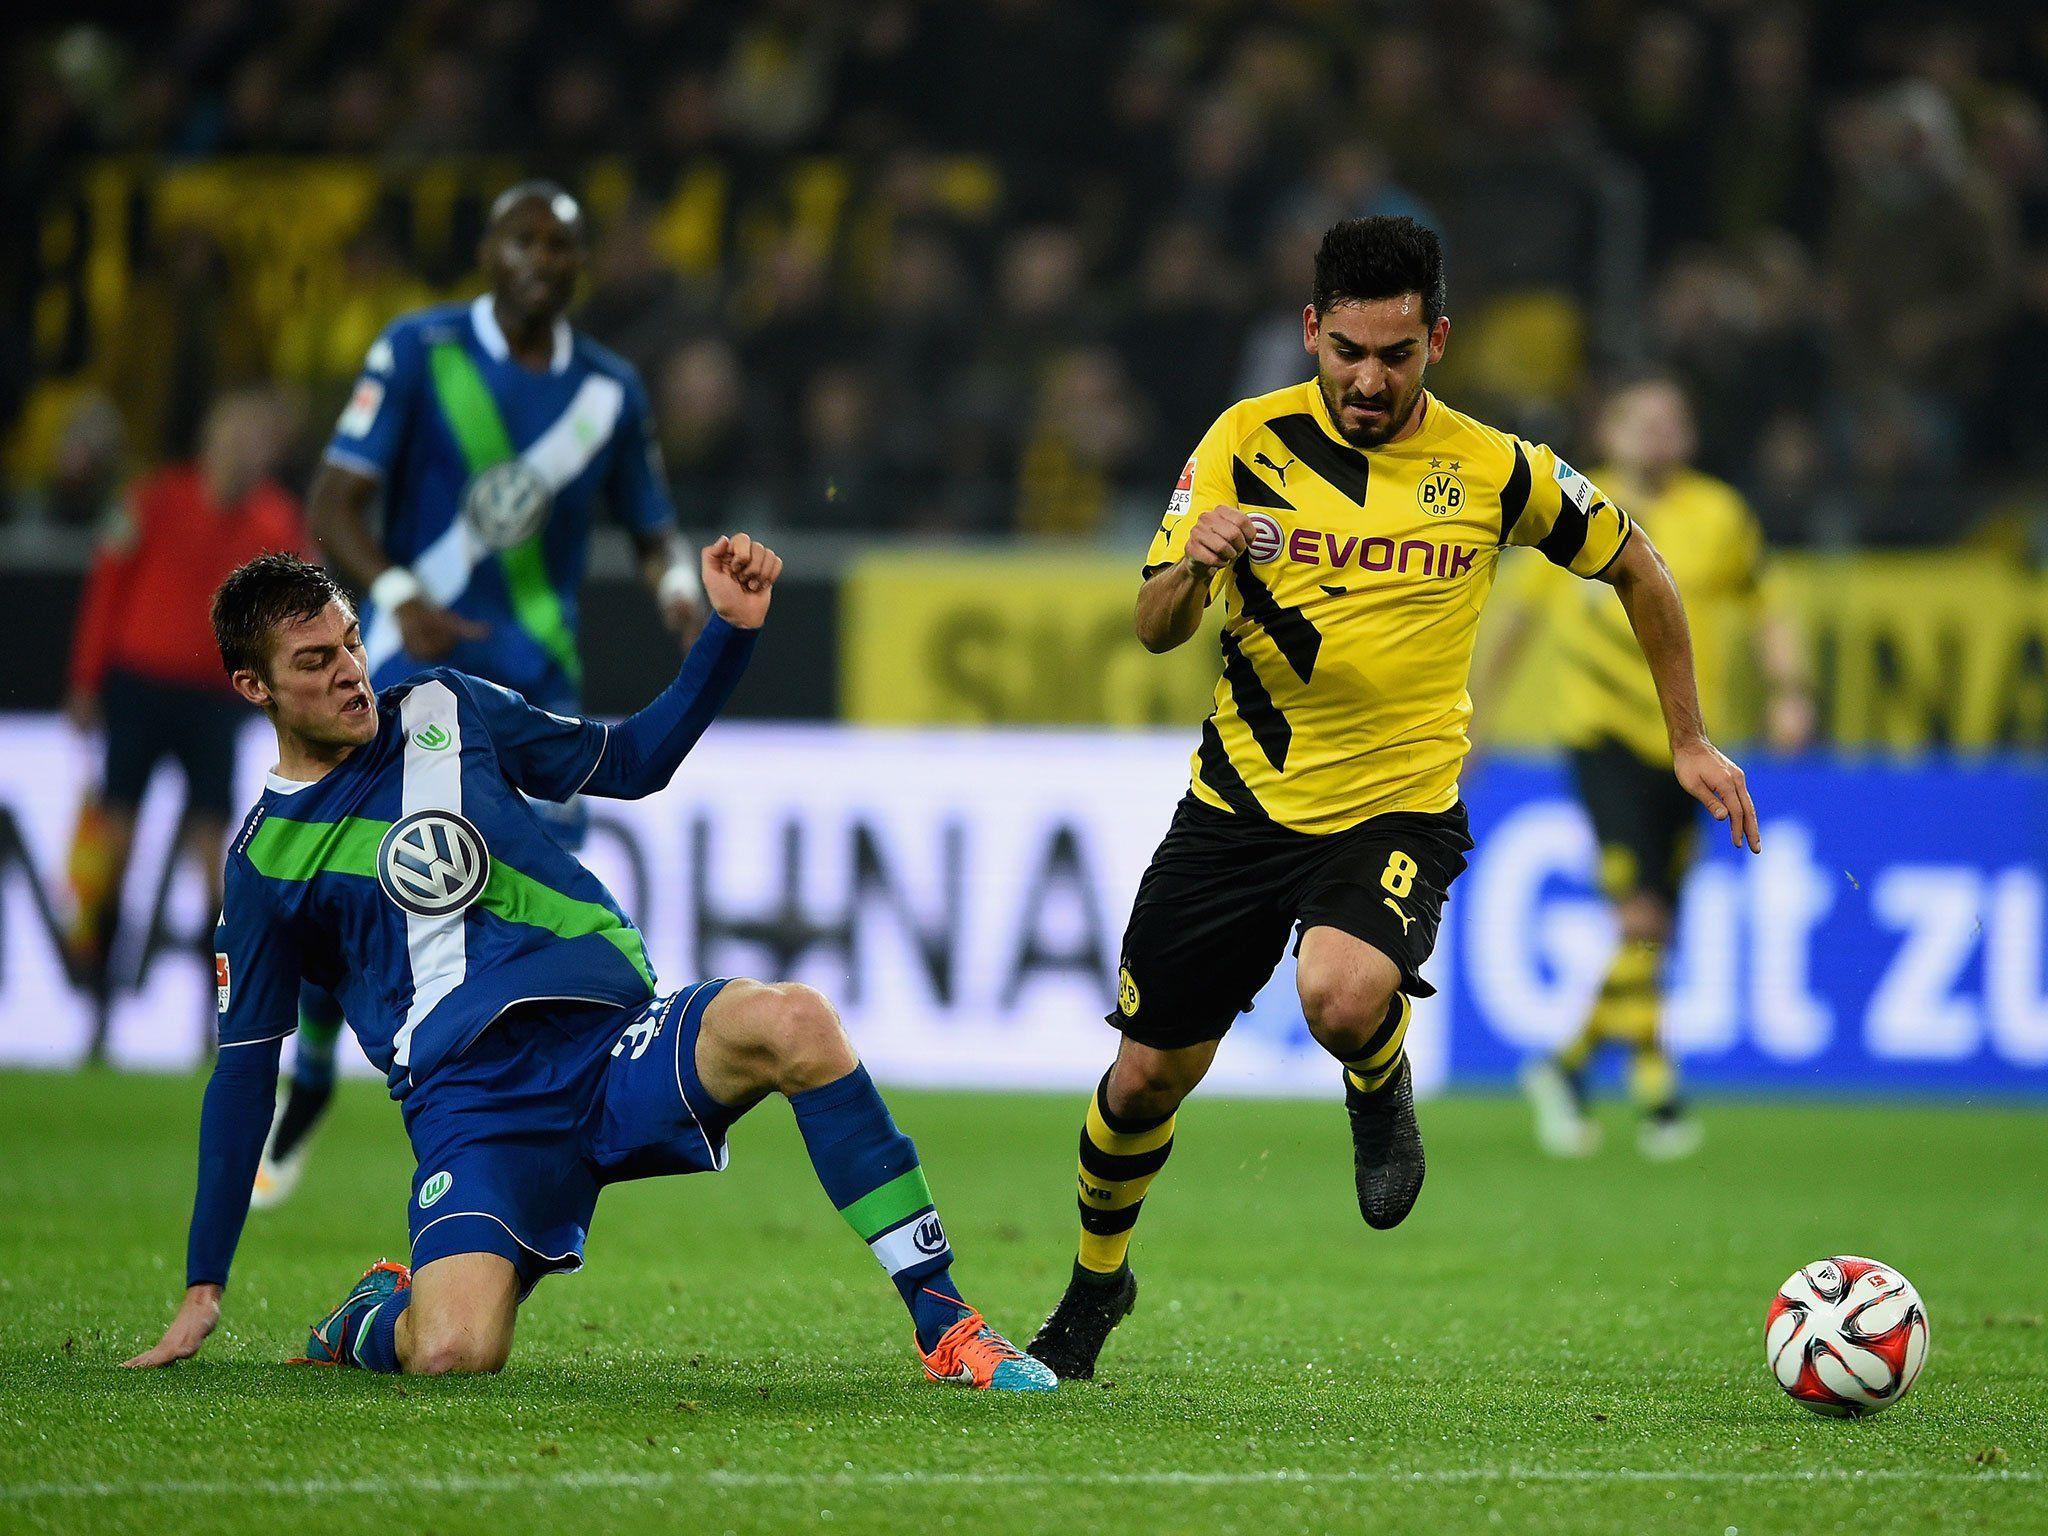 Ilkay Gundogan to Manchester United: Borussia Dortmund star could